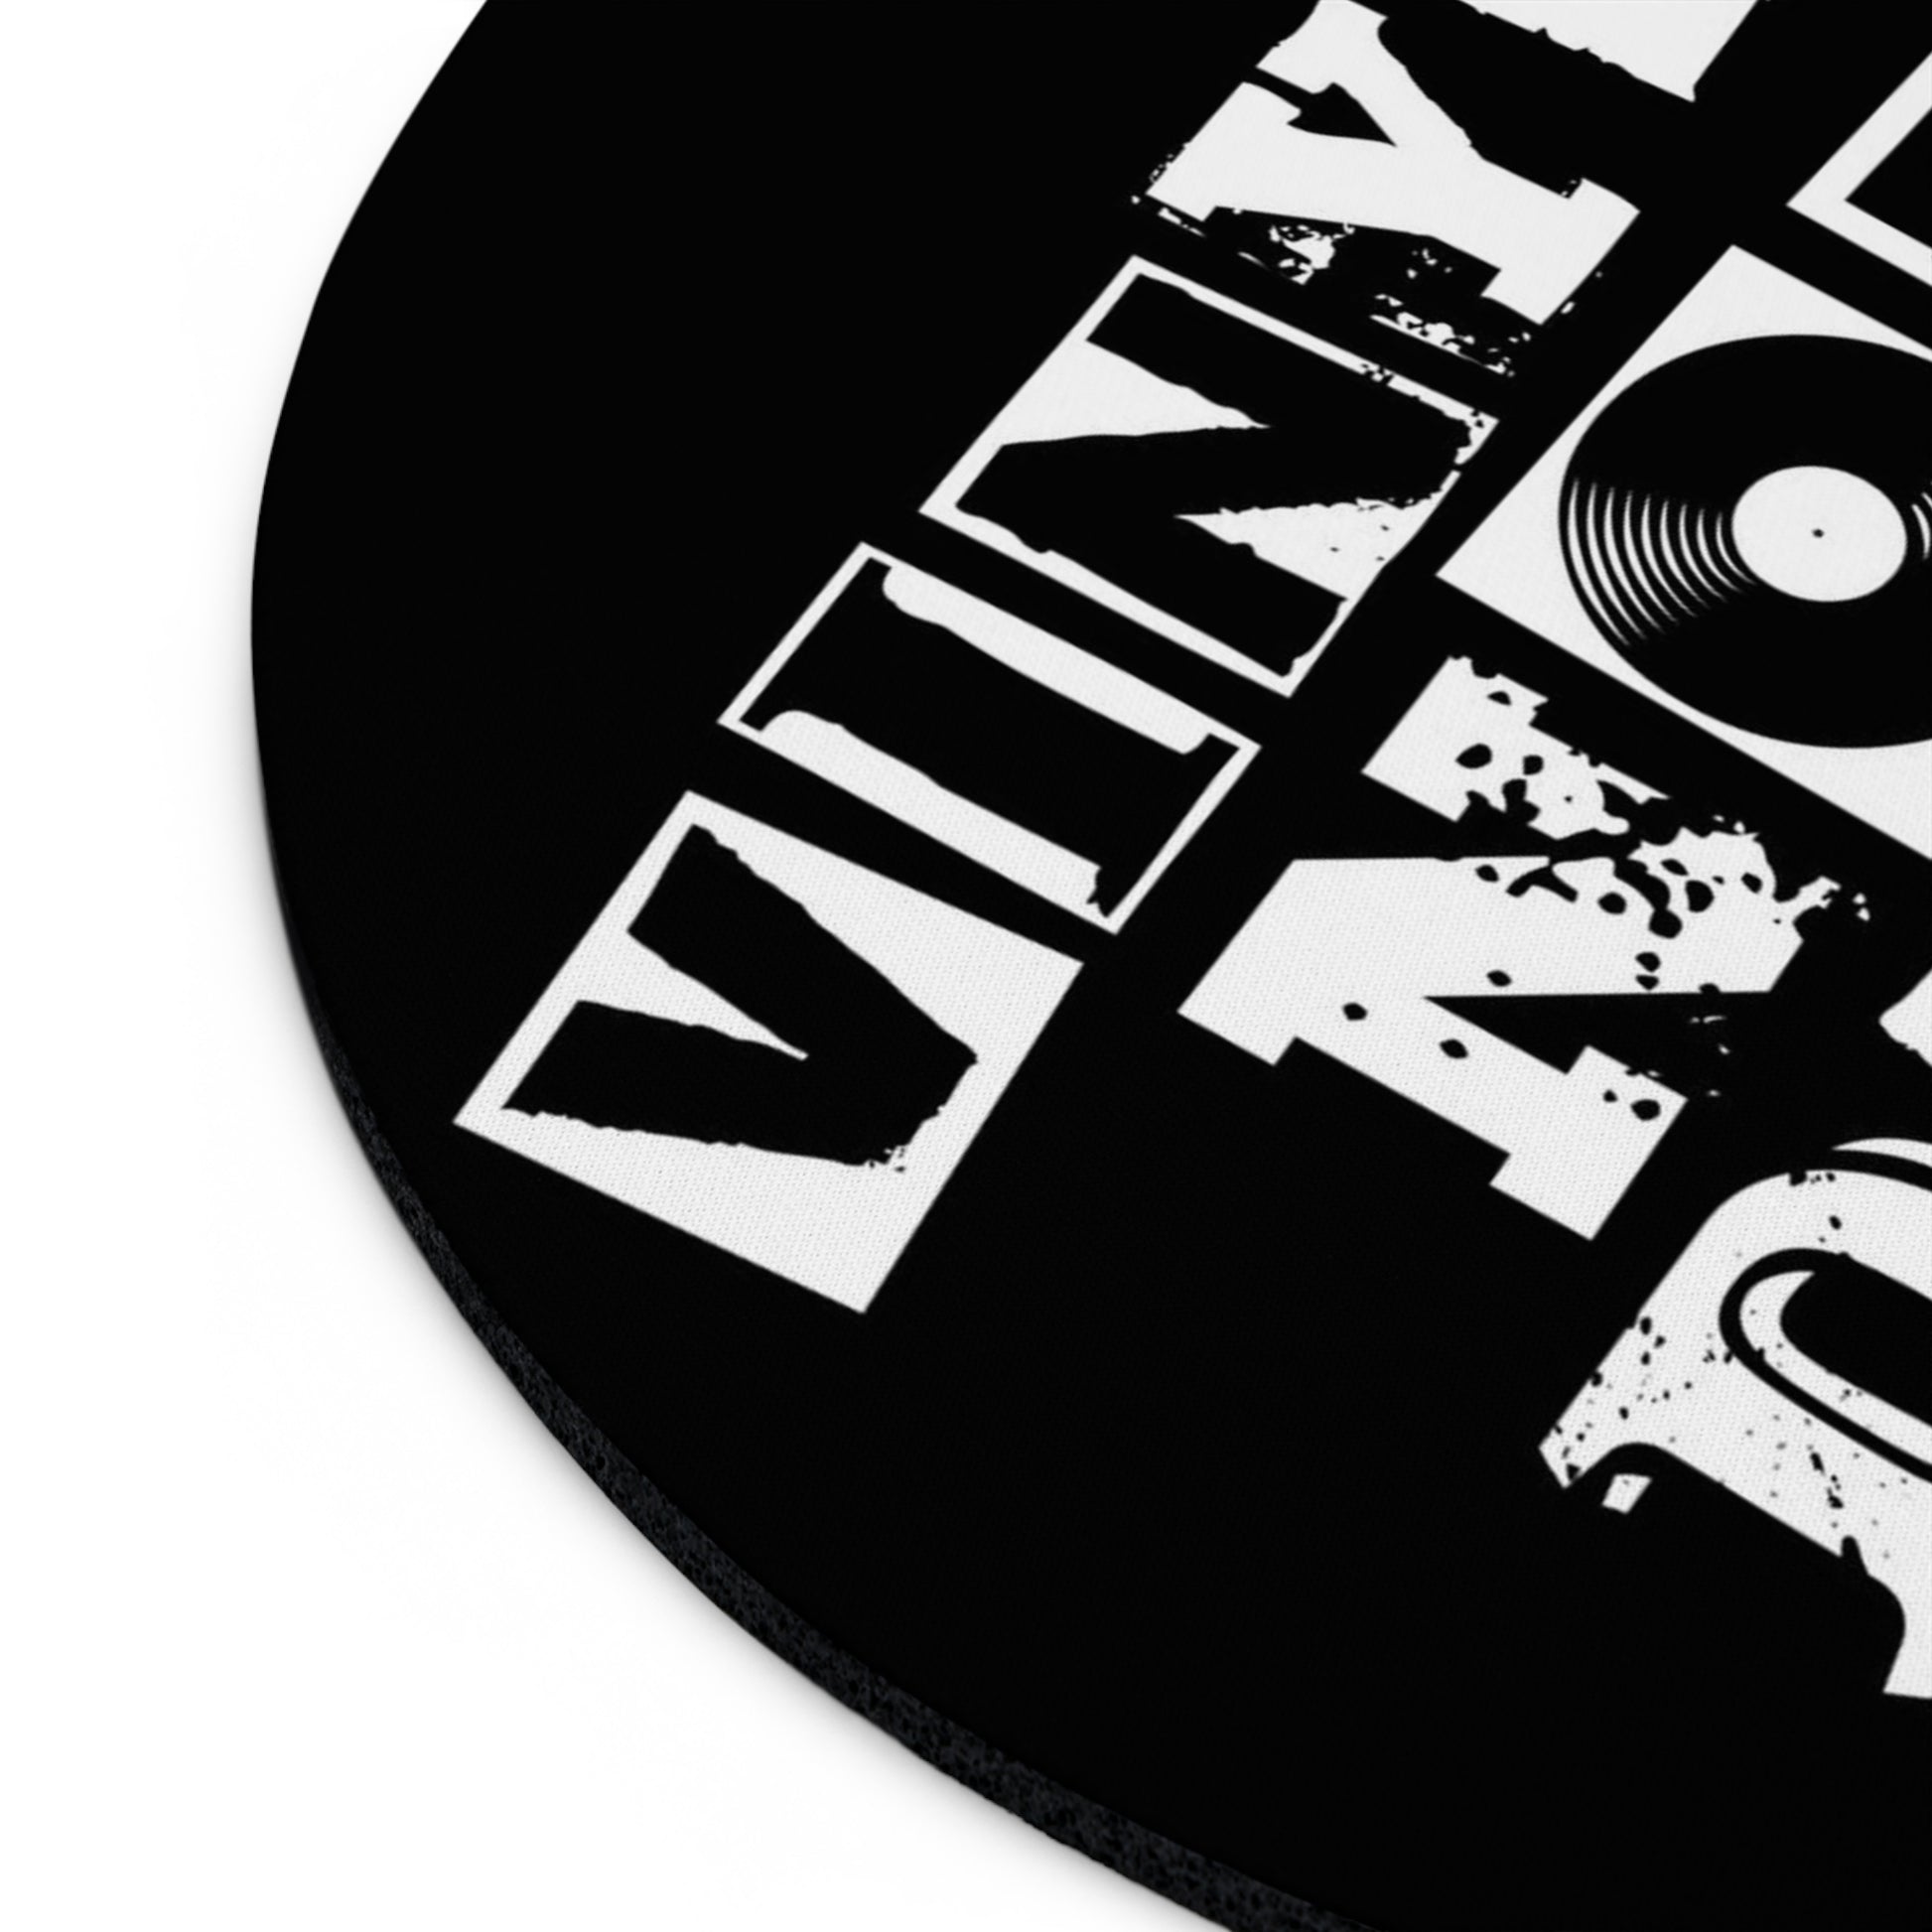 Vinyl Record Themed Mouse Pad - Vinyl is Not Dead Print details